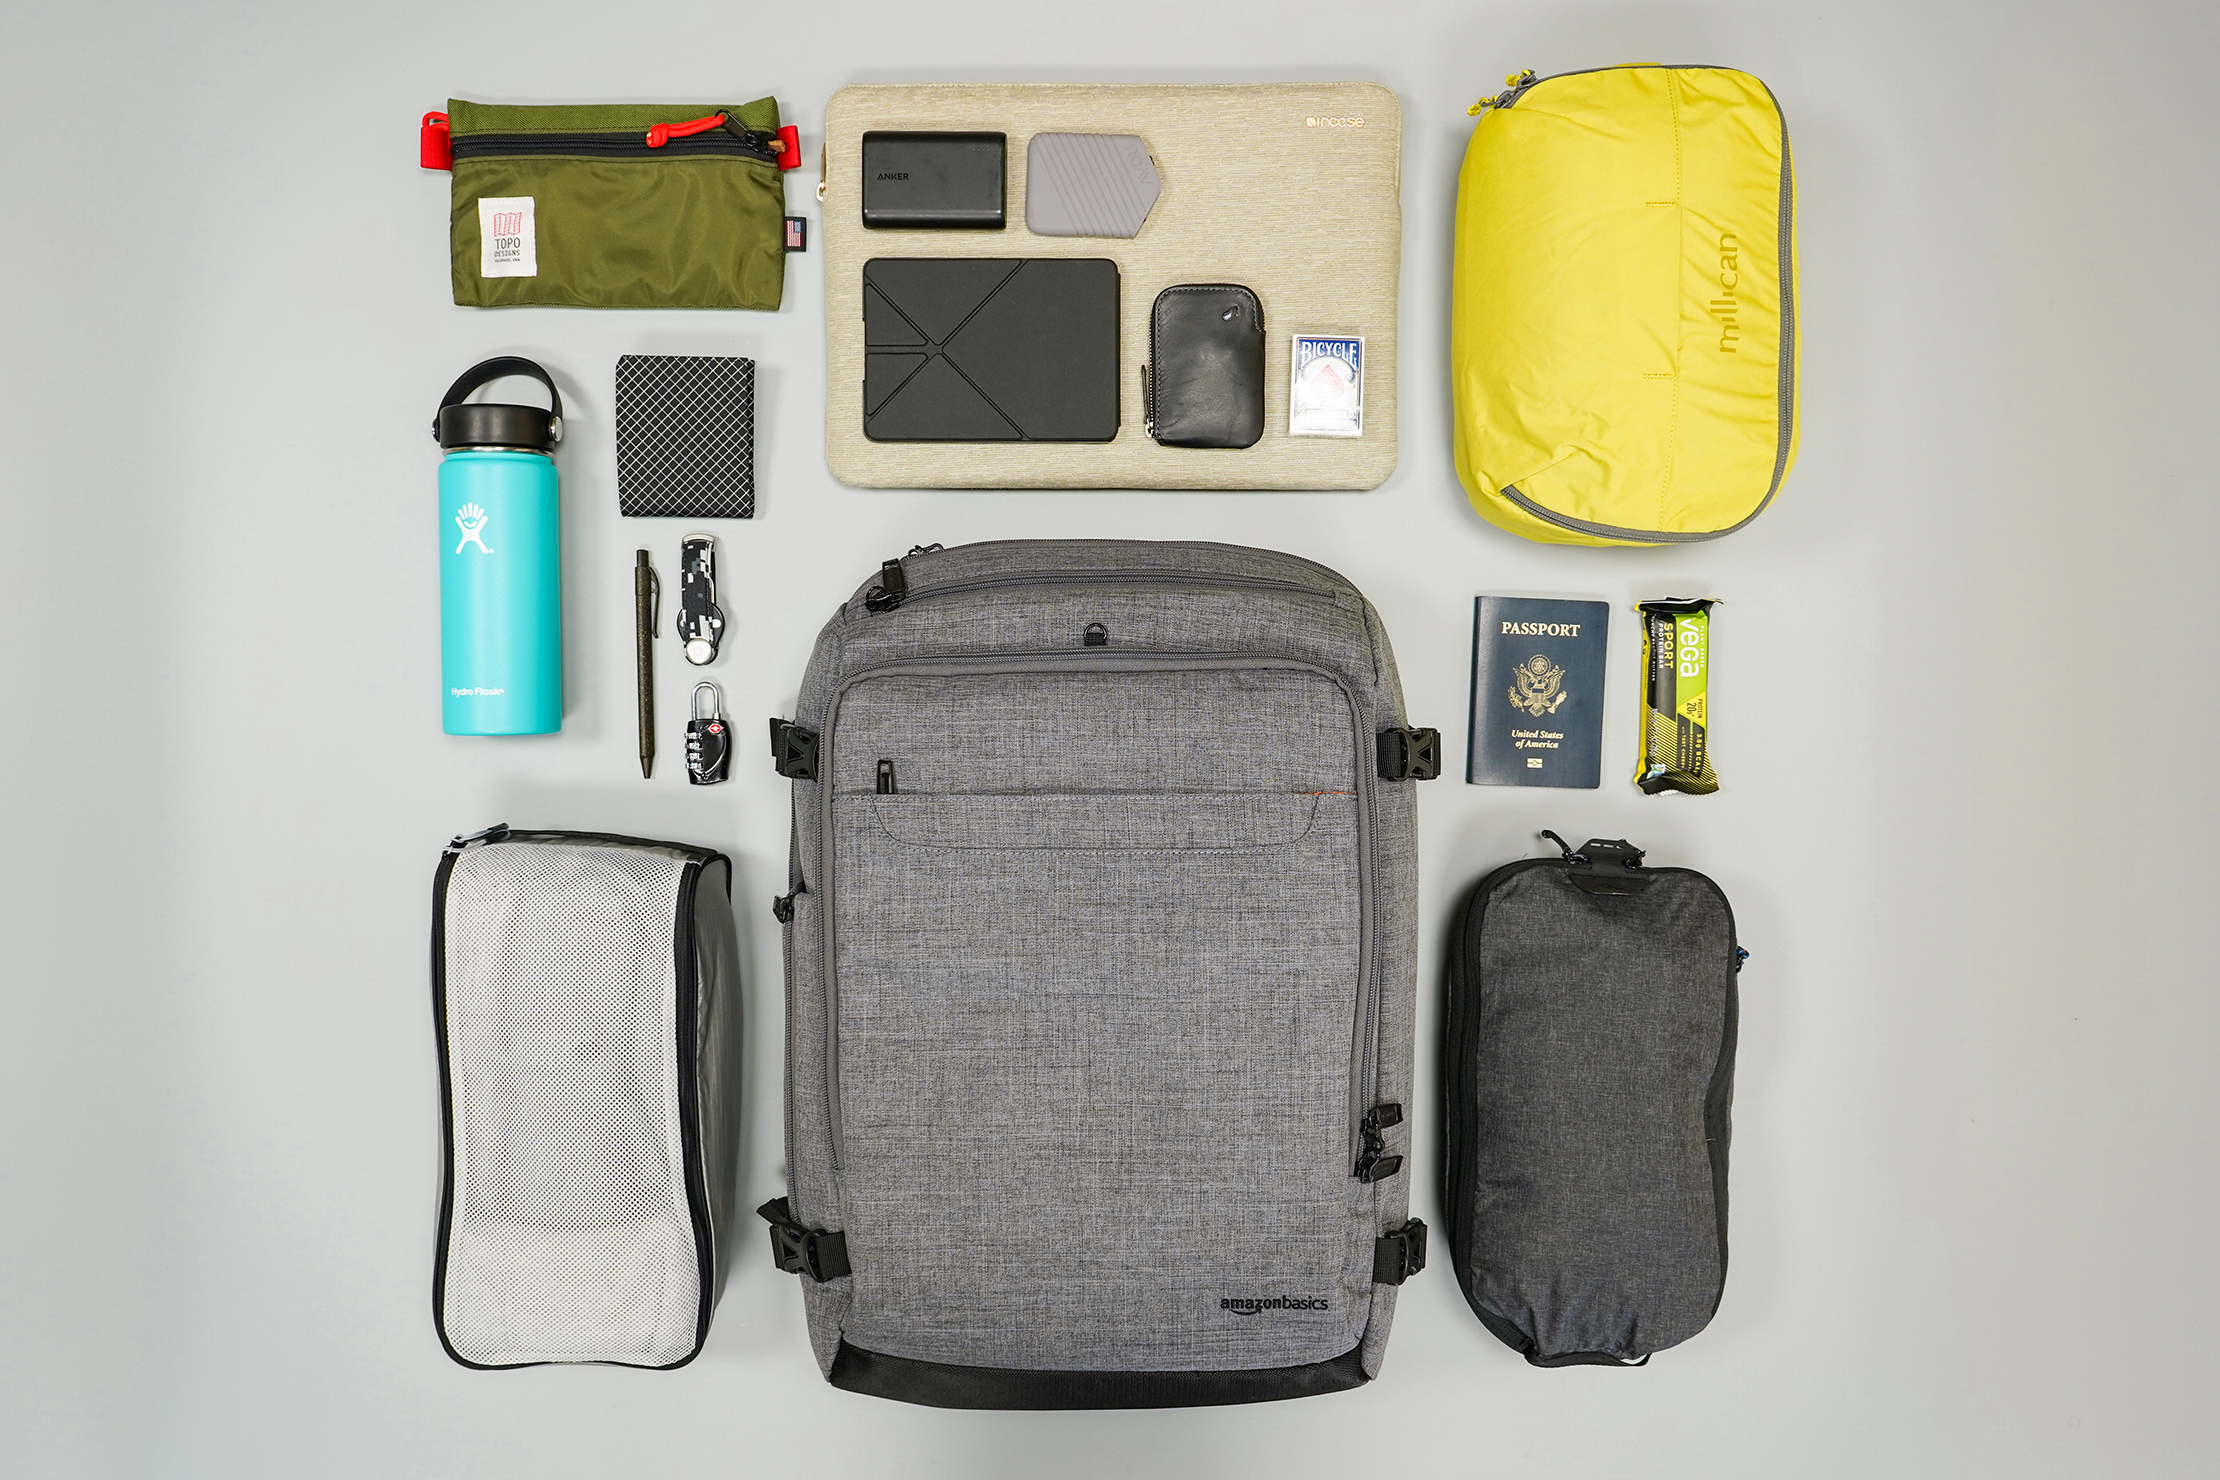 AmazonBasics Slim Travel Backpack Weekender Flat Lay